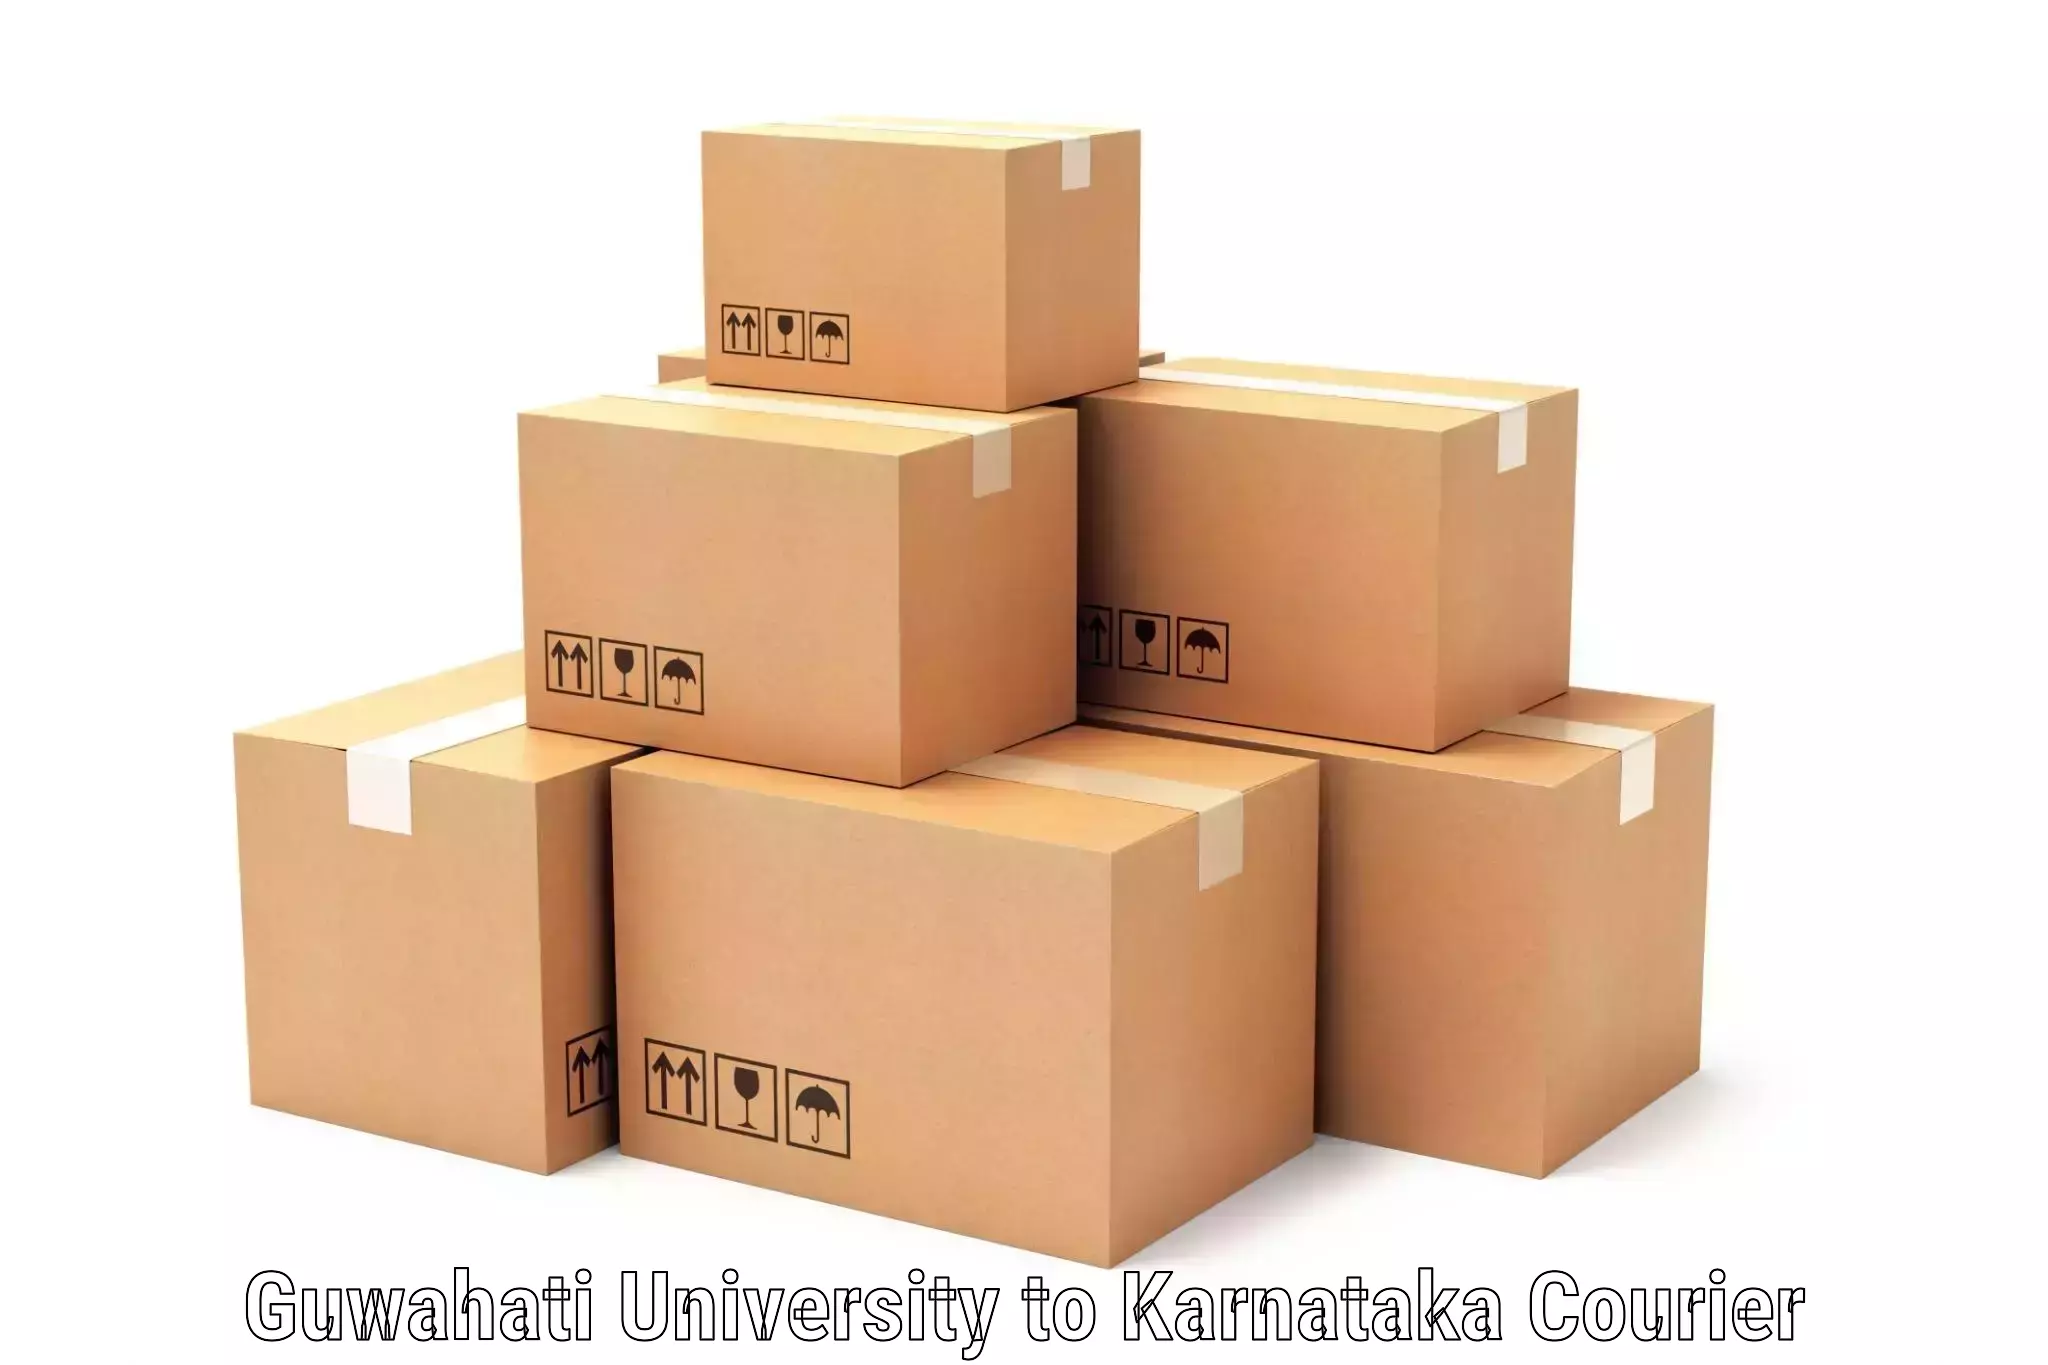 Express delivery capabilities Guwahati University to Karnataka